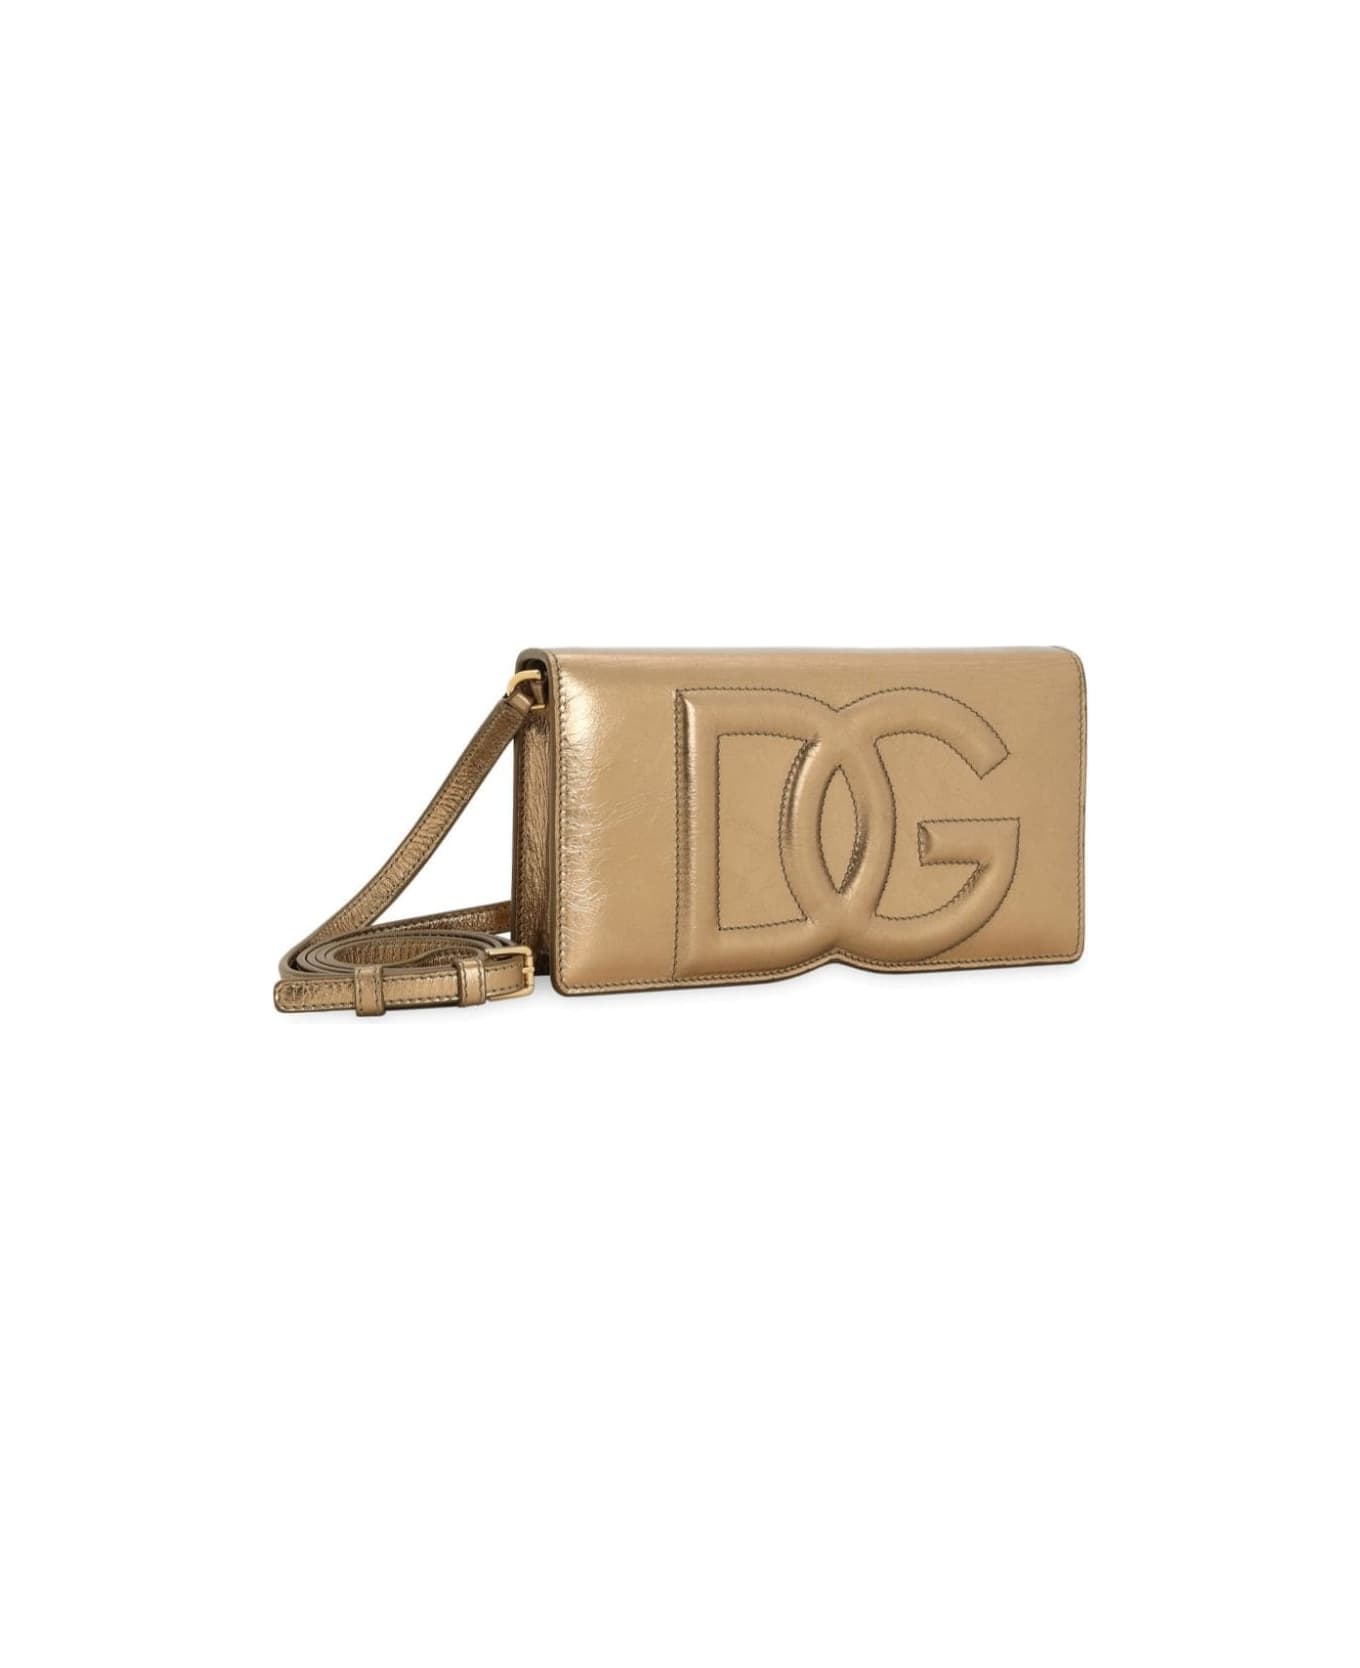 Dolce & Gabbana Phone Bag Vit.cracle'lame' - Metallic